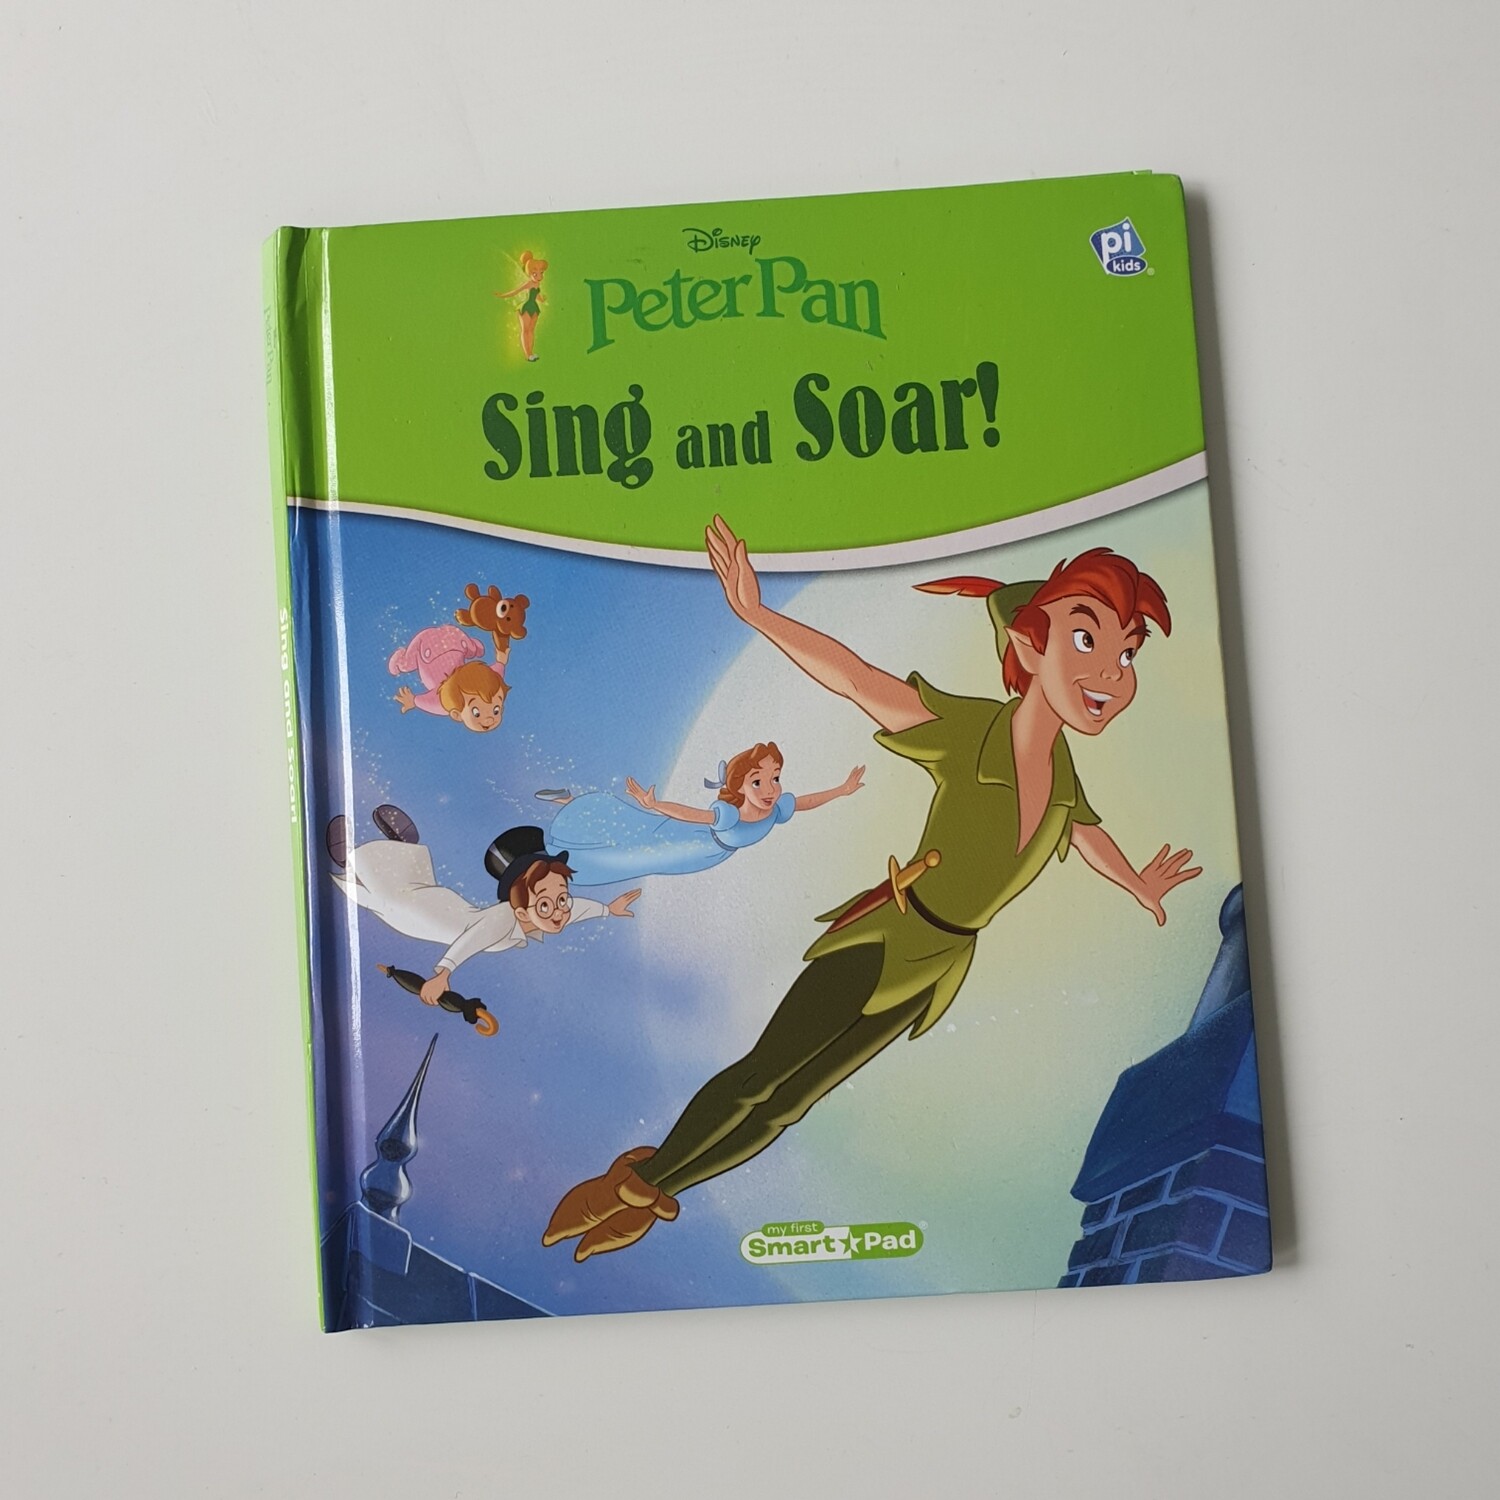 Peter Pan - Sing and Soar!